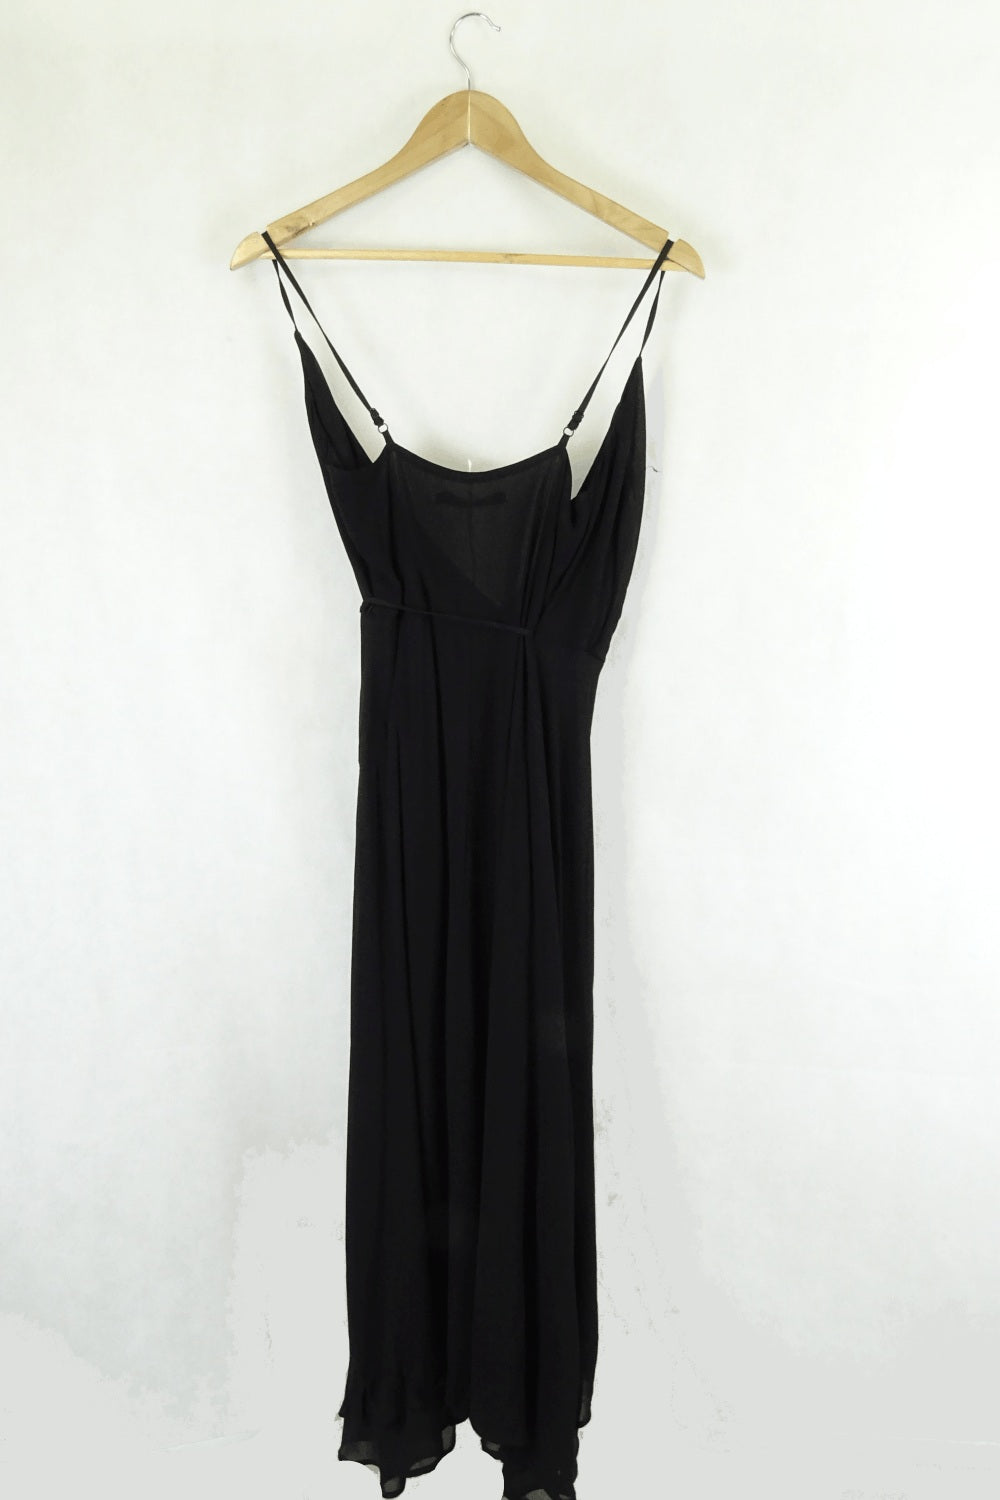 Sportsgirl Black Wrap Dress 6